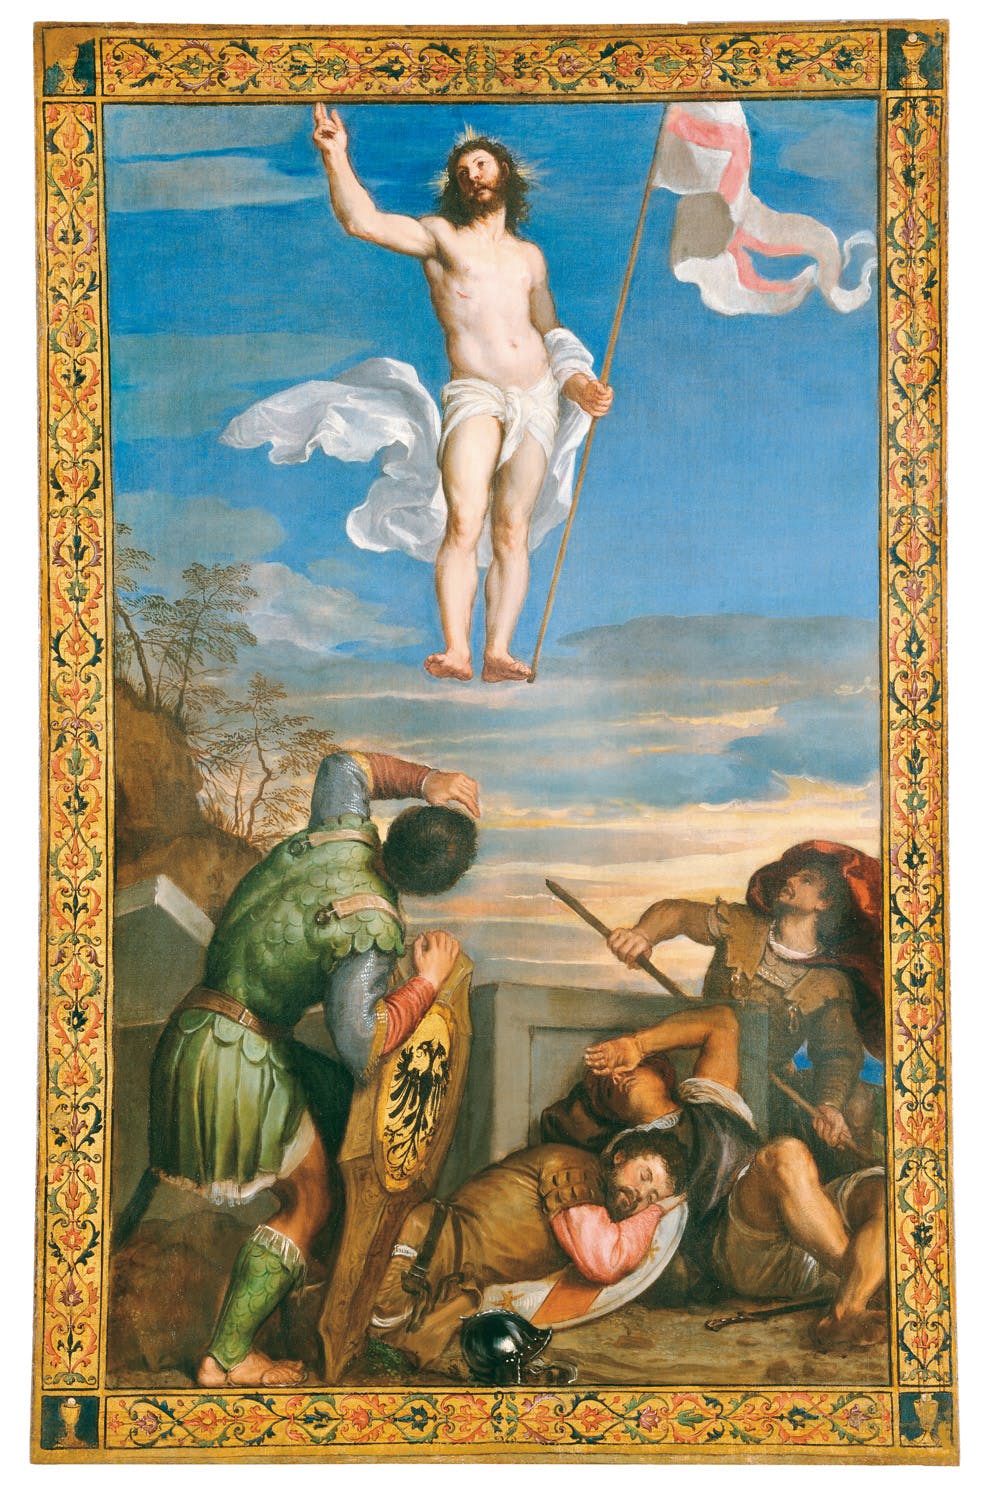 Pietro Aretino and the Art of the Renaissance